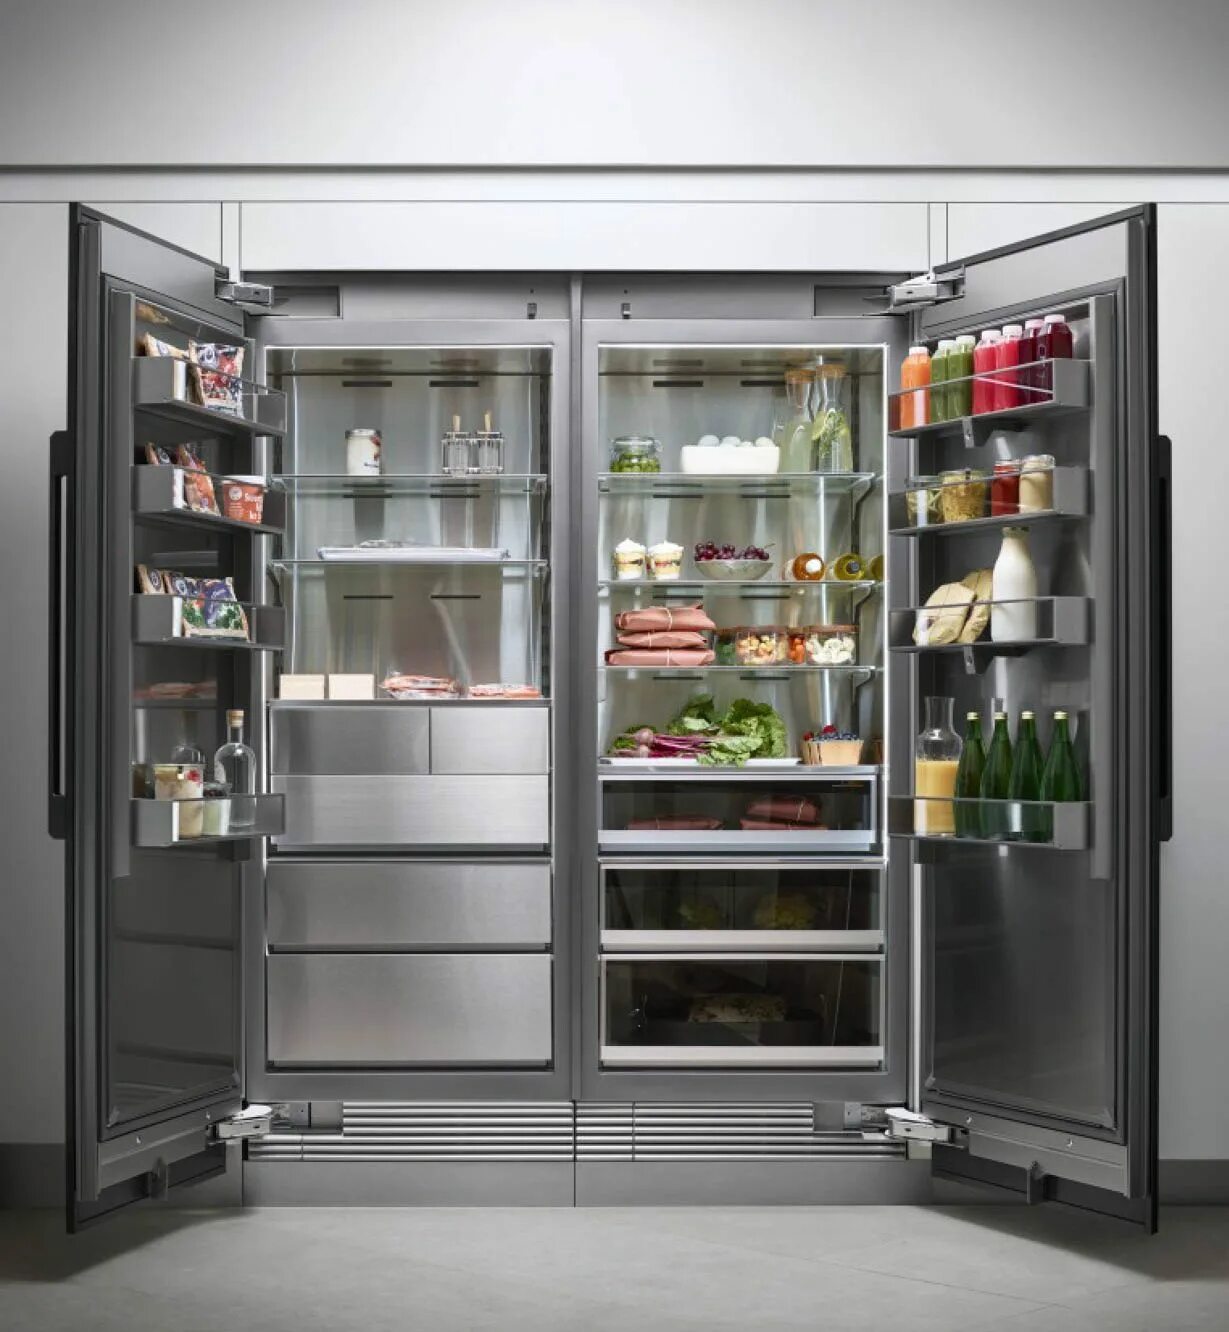 Холодильник side by side gorenje. Двухстворчатый холодильник Miele. Холодильник Samsung rs66n8100s9. Американский холодильник. Большой холодильник.